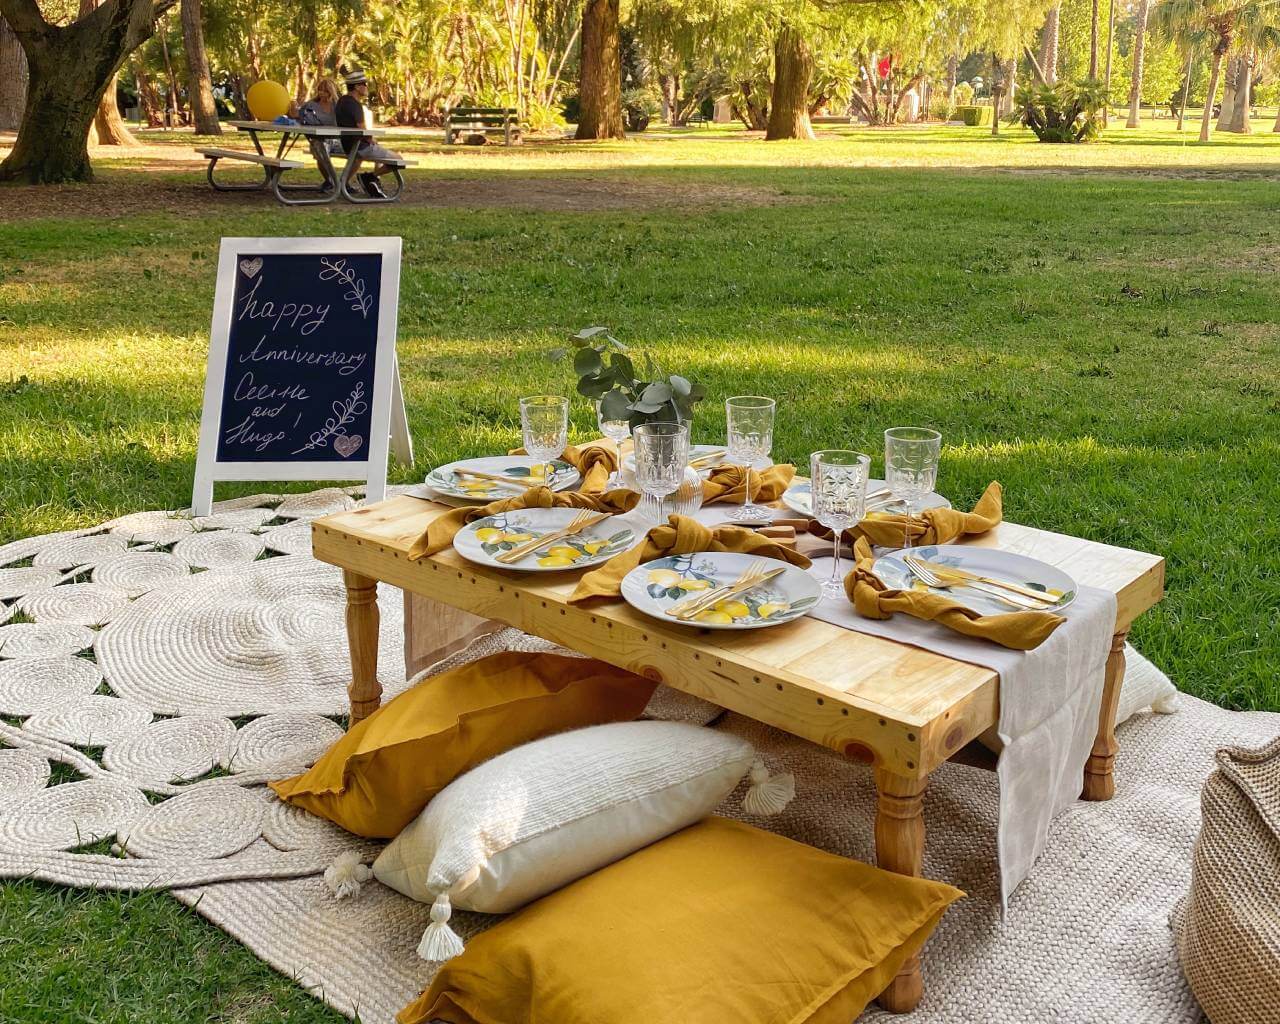 Los Angeles luxury picnic company